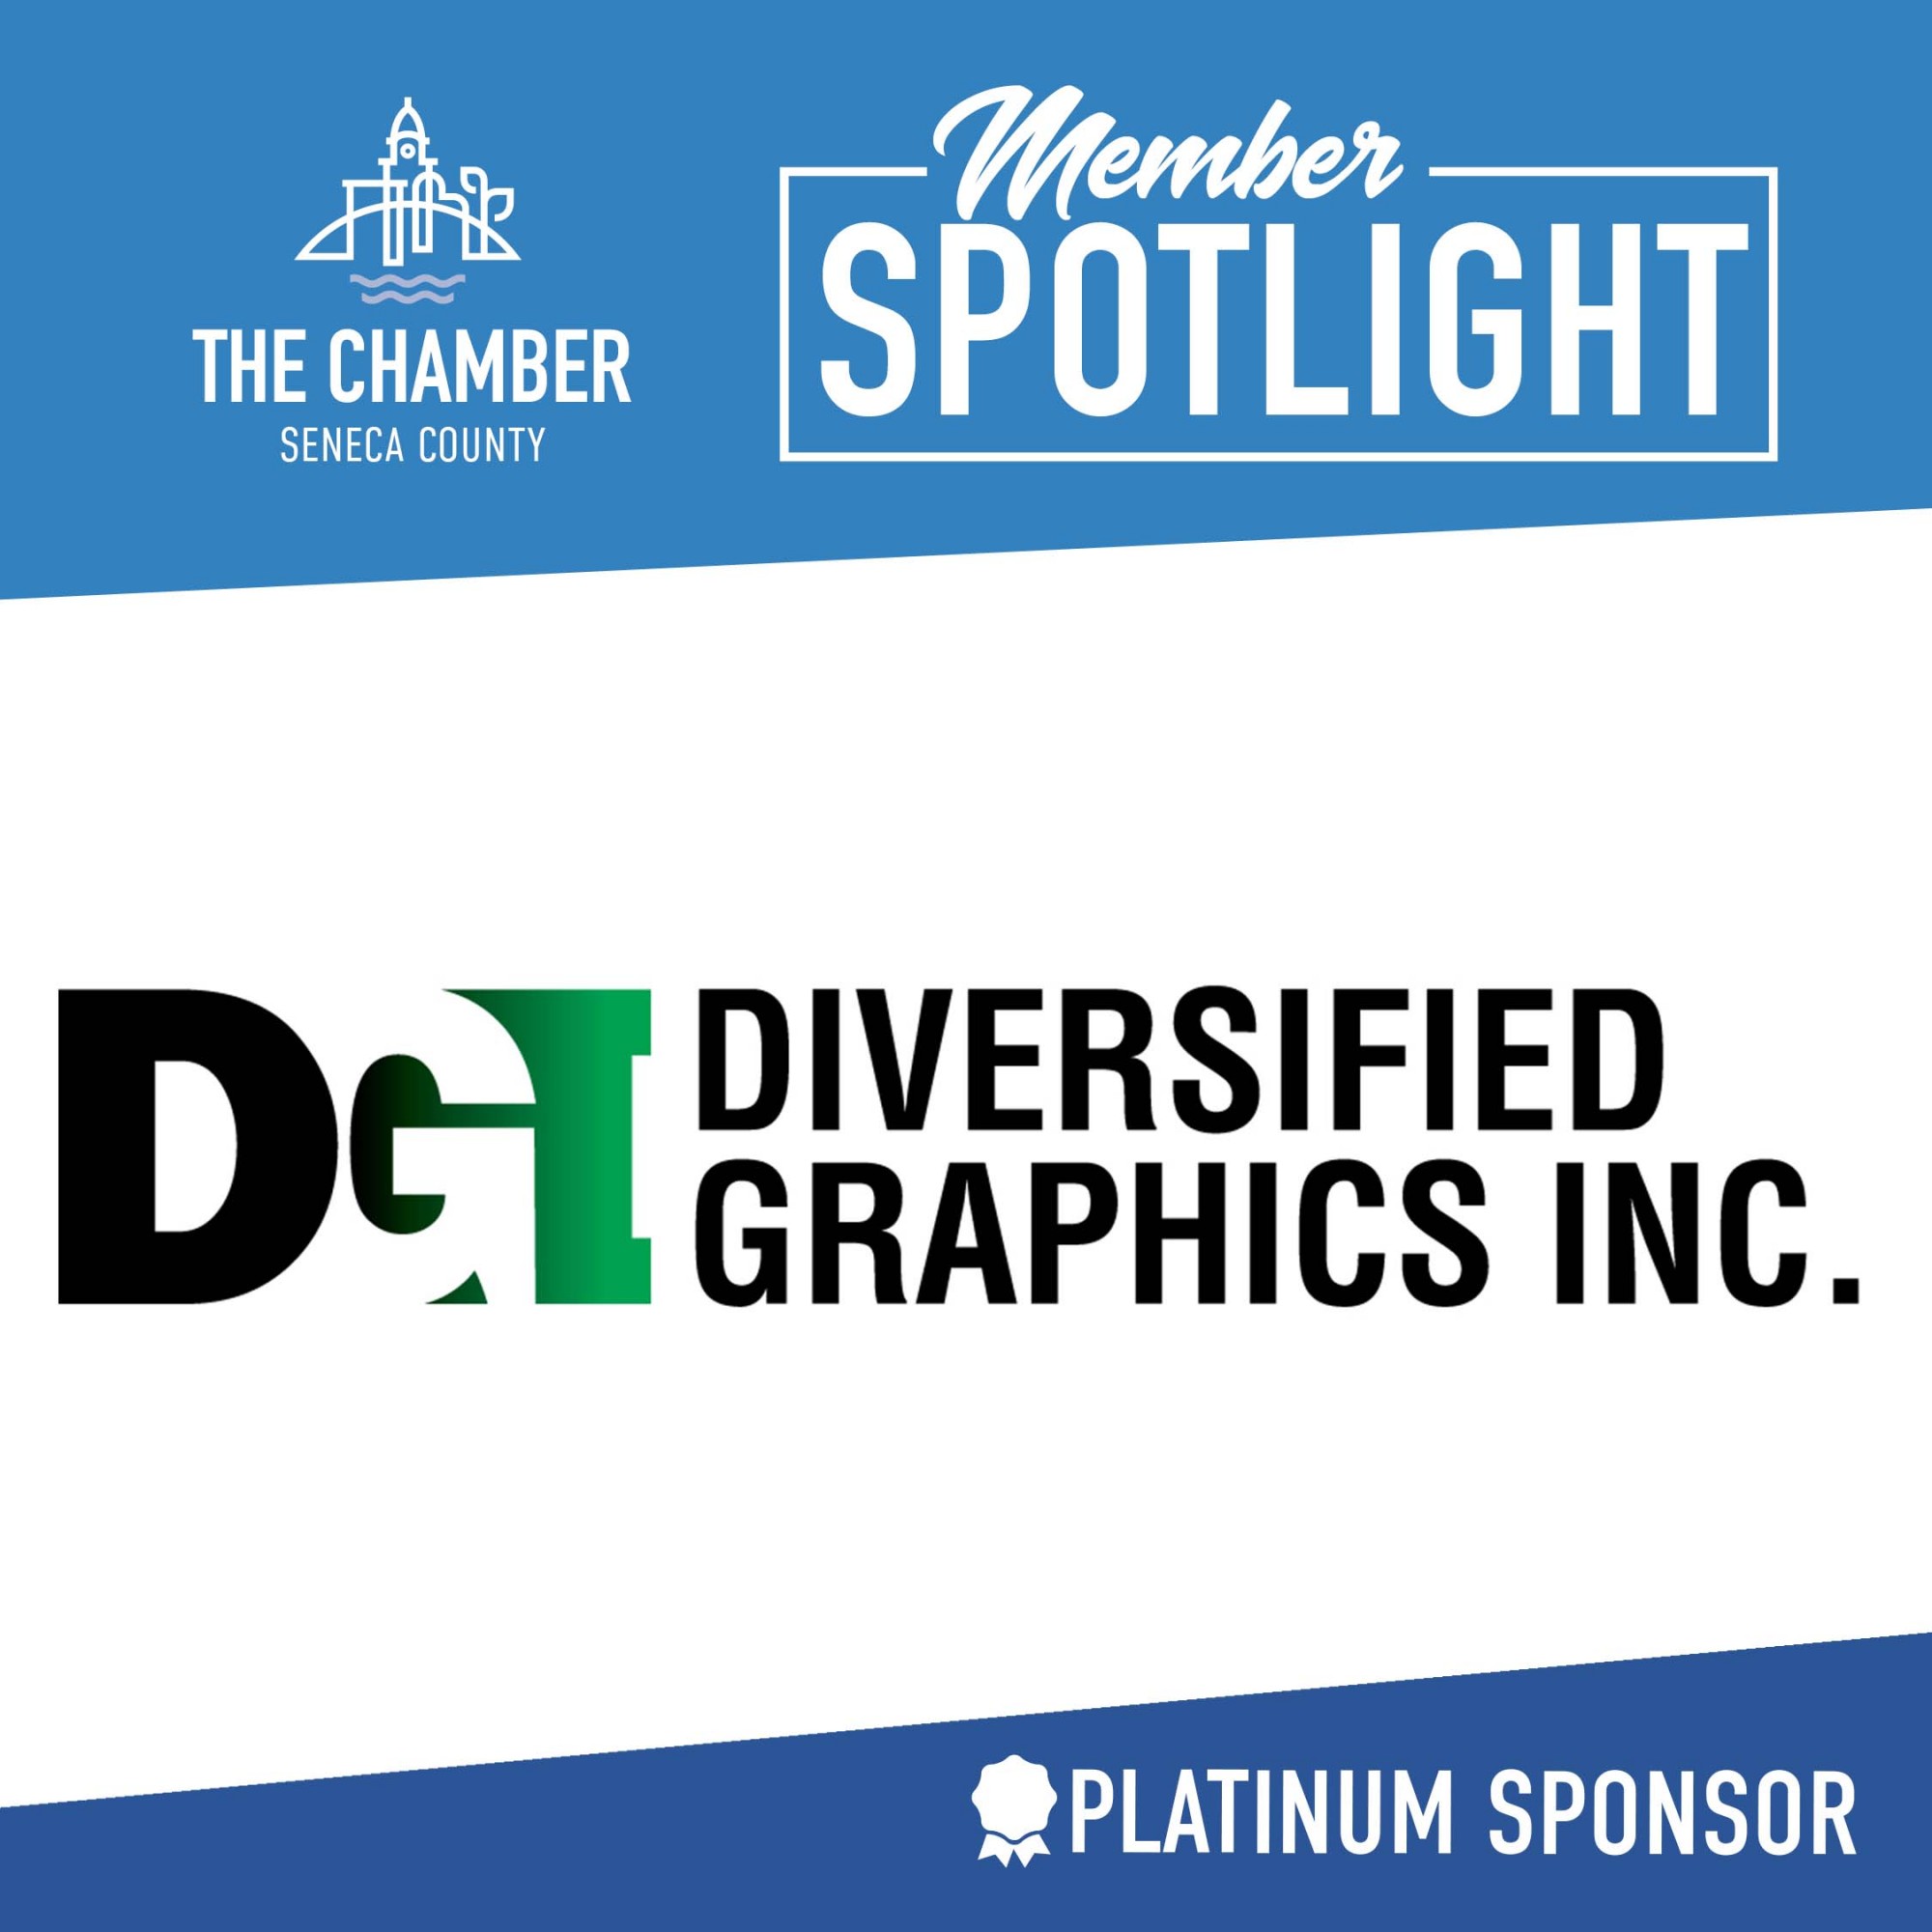 Member Spotlight Diversified Graphics, Inc.